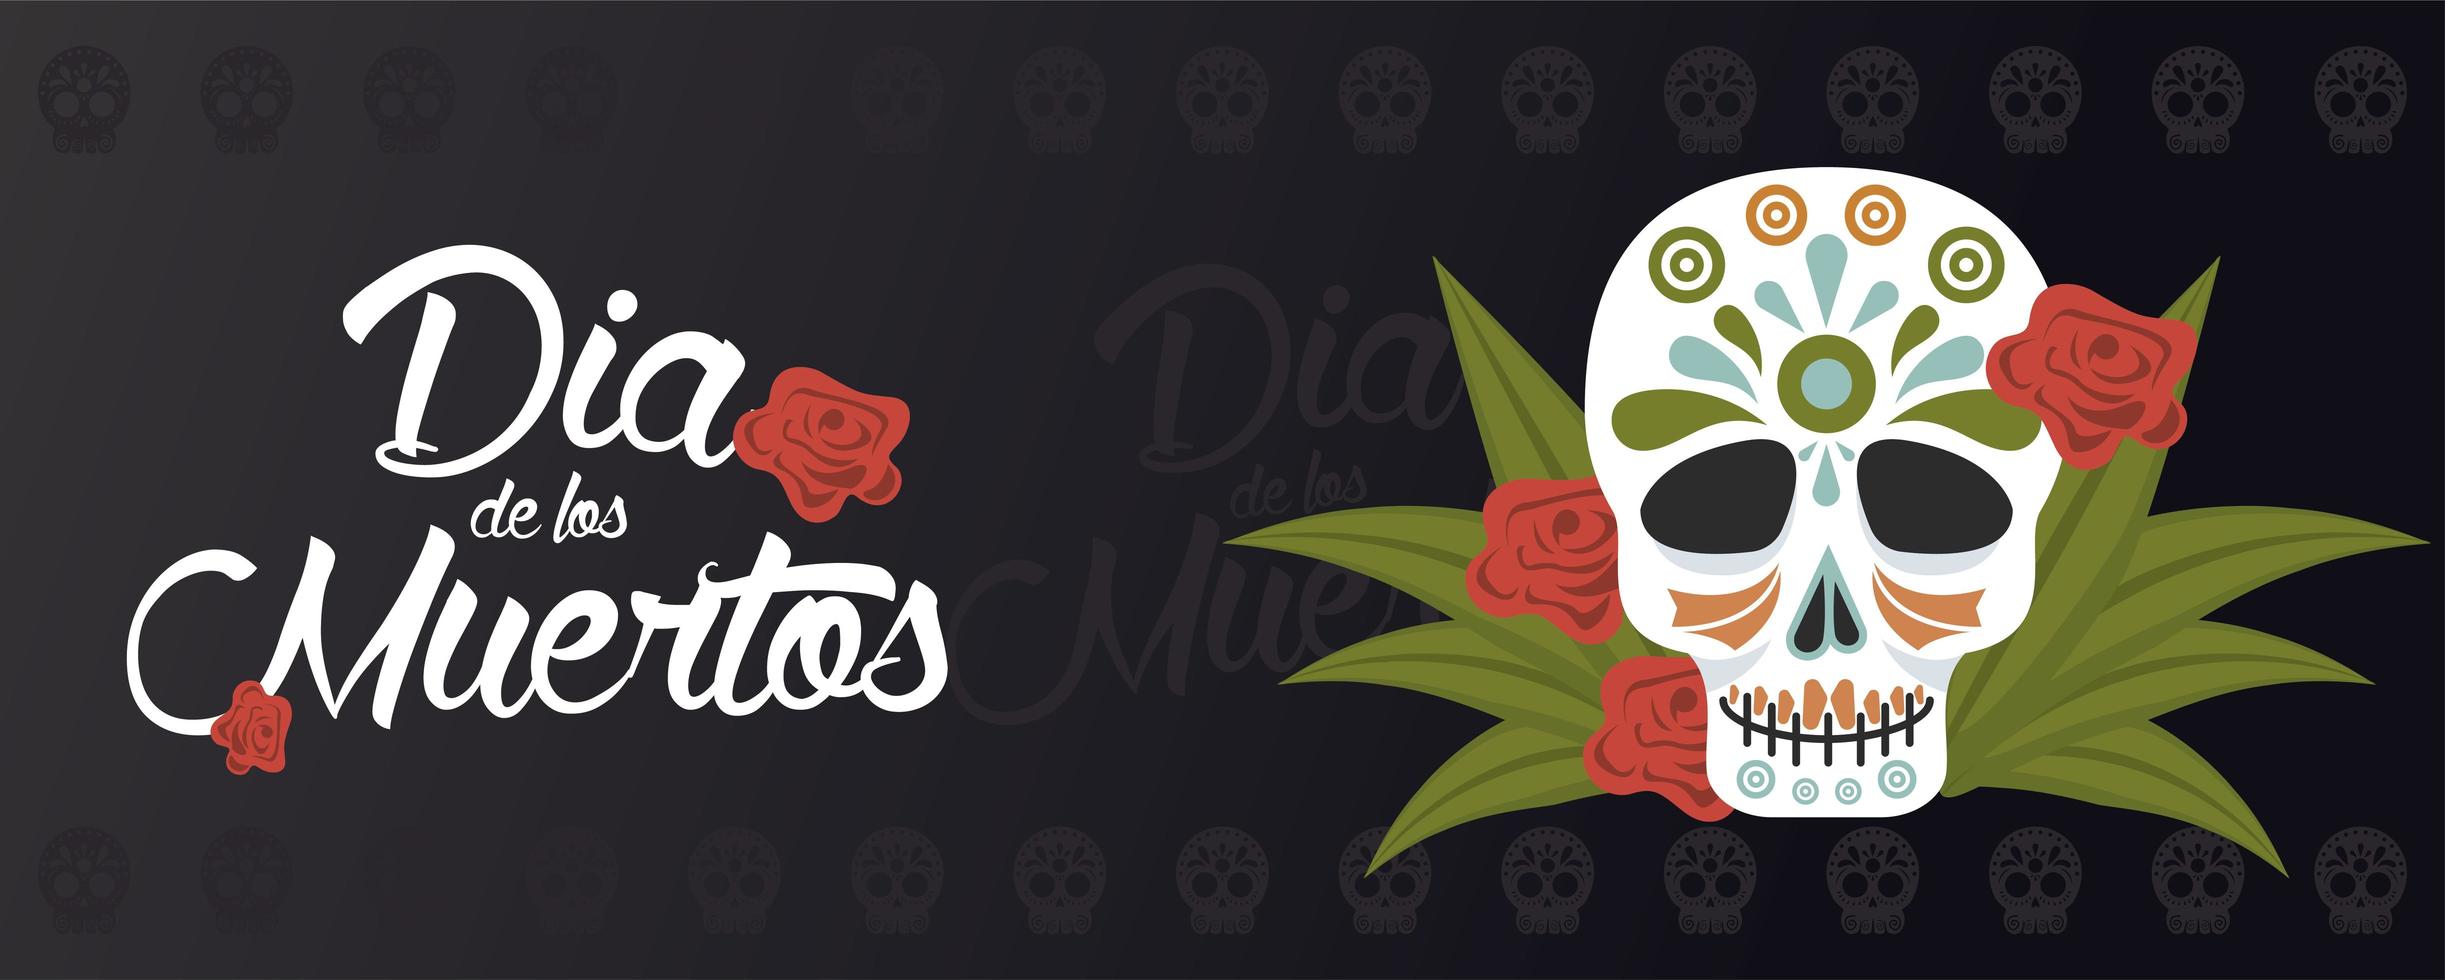 dia de los muertos poster with head skull and flowers vector